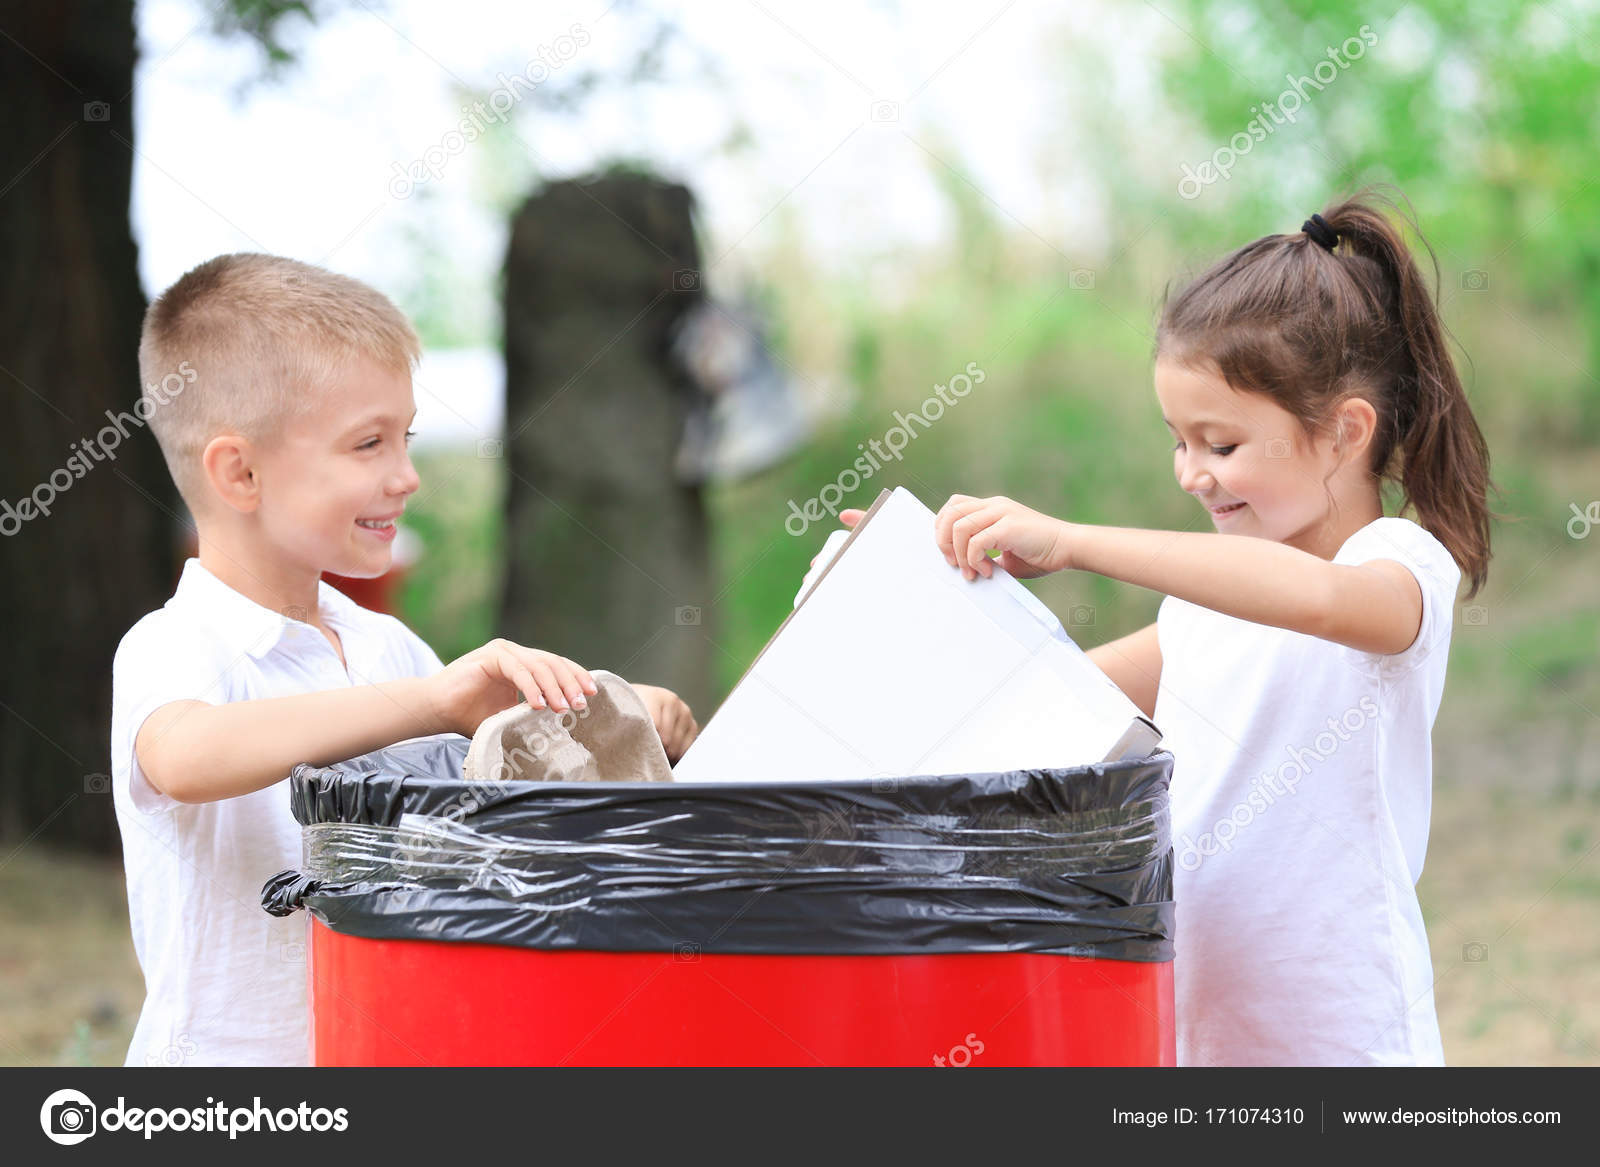 https://st3.depositphotos.com/1177973/17107/i/1600/depositphotos_171074310-stock-photo-little-kids-throwing-garbage-into.jpg